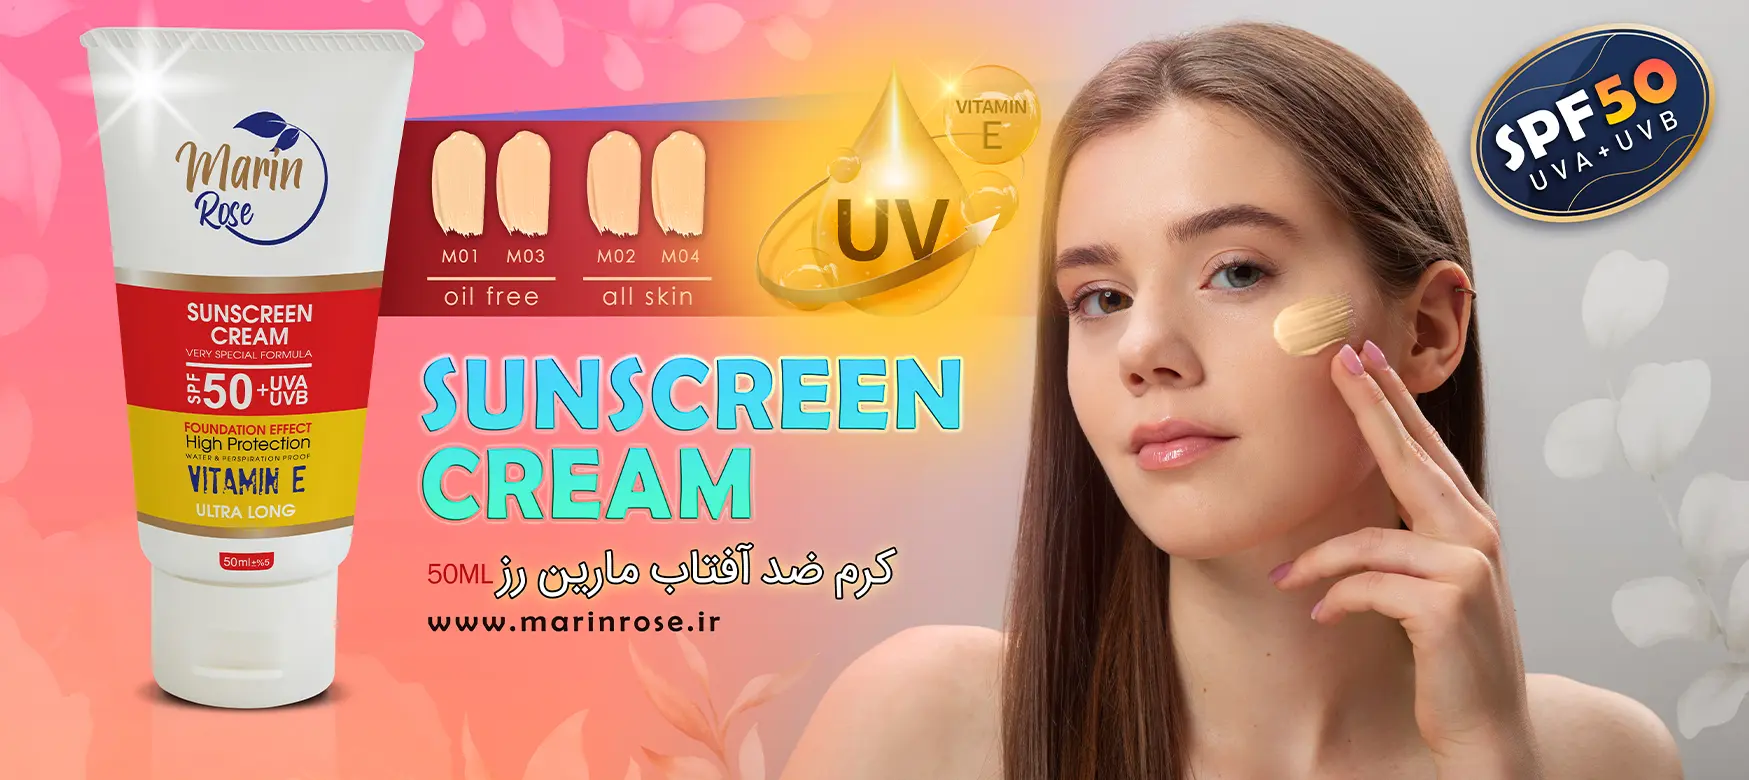 sunscreen cream marinrose